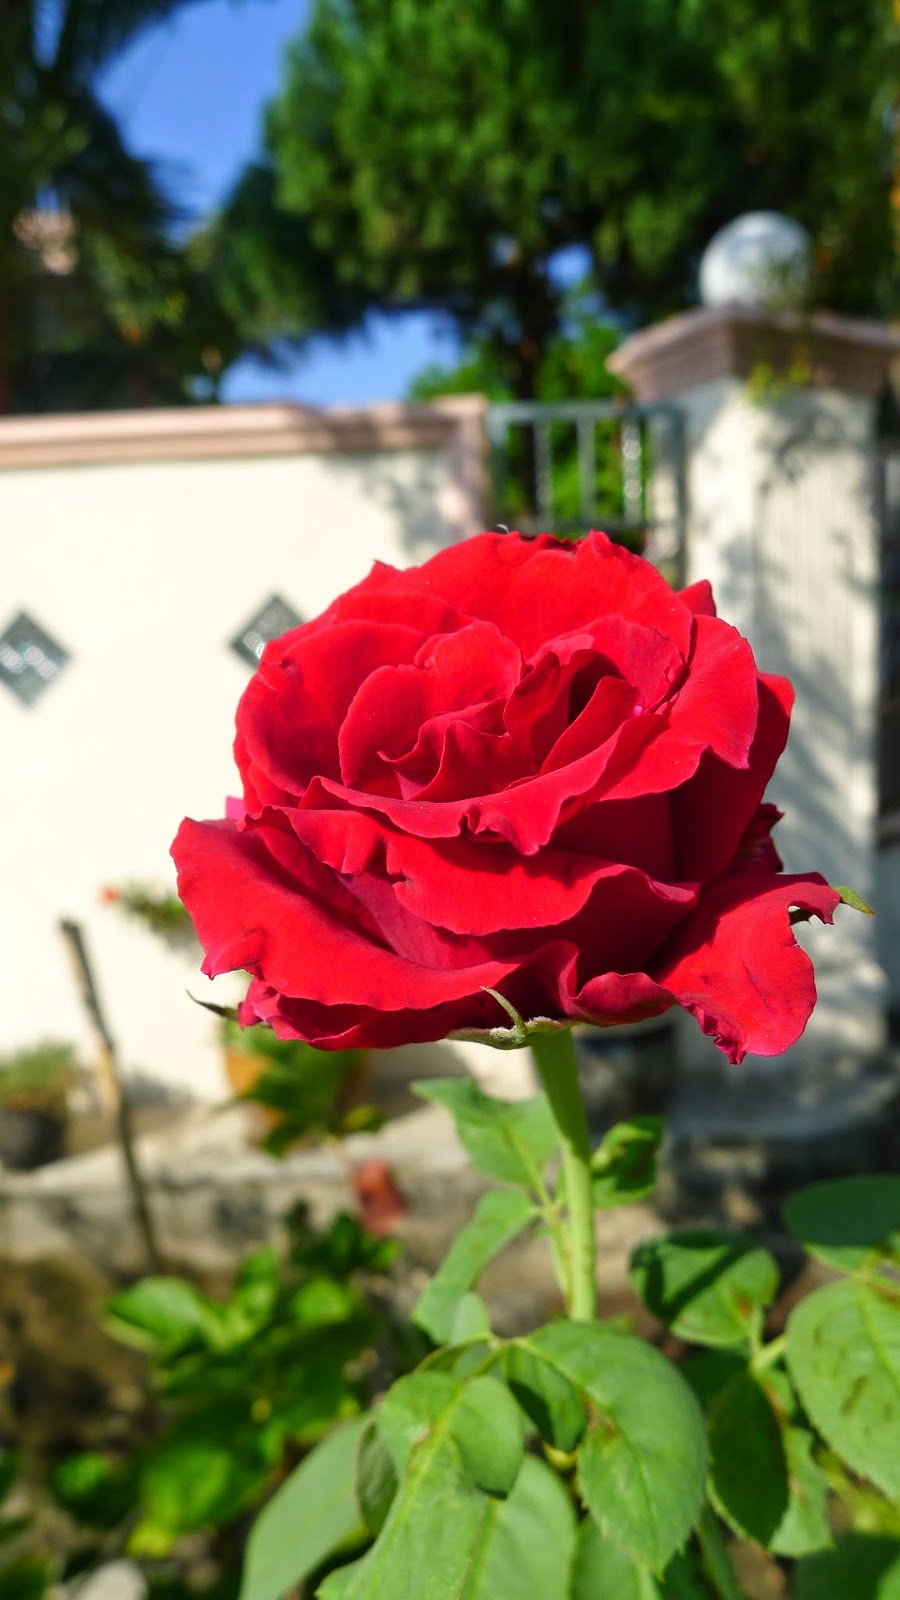 My Beautiful 'Flower - Flower ' World: Beautiful Roses